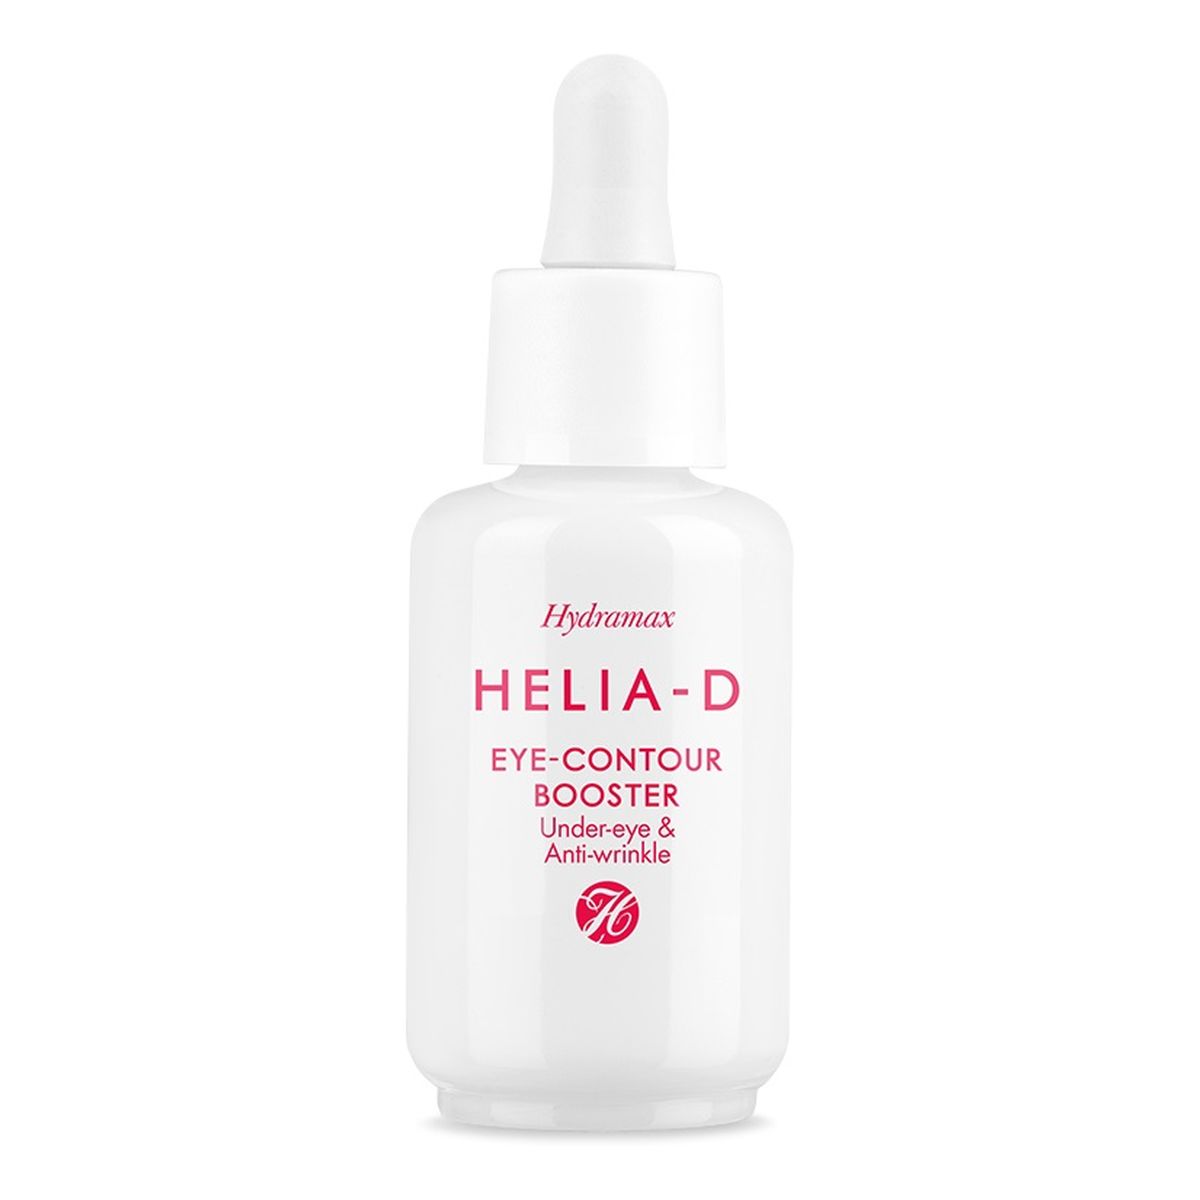 Helia-D Hydramax eye-contour booster serum odmładzające kontur oka 30ml